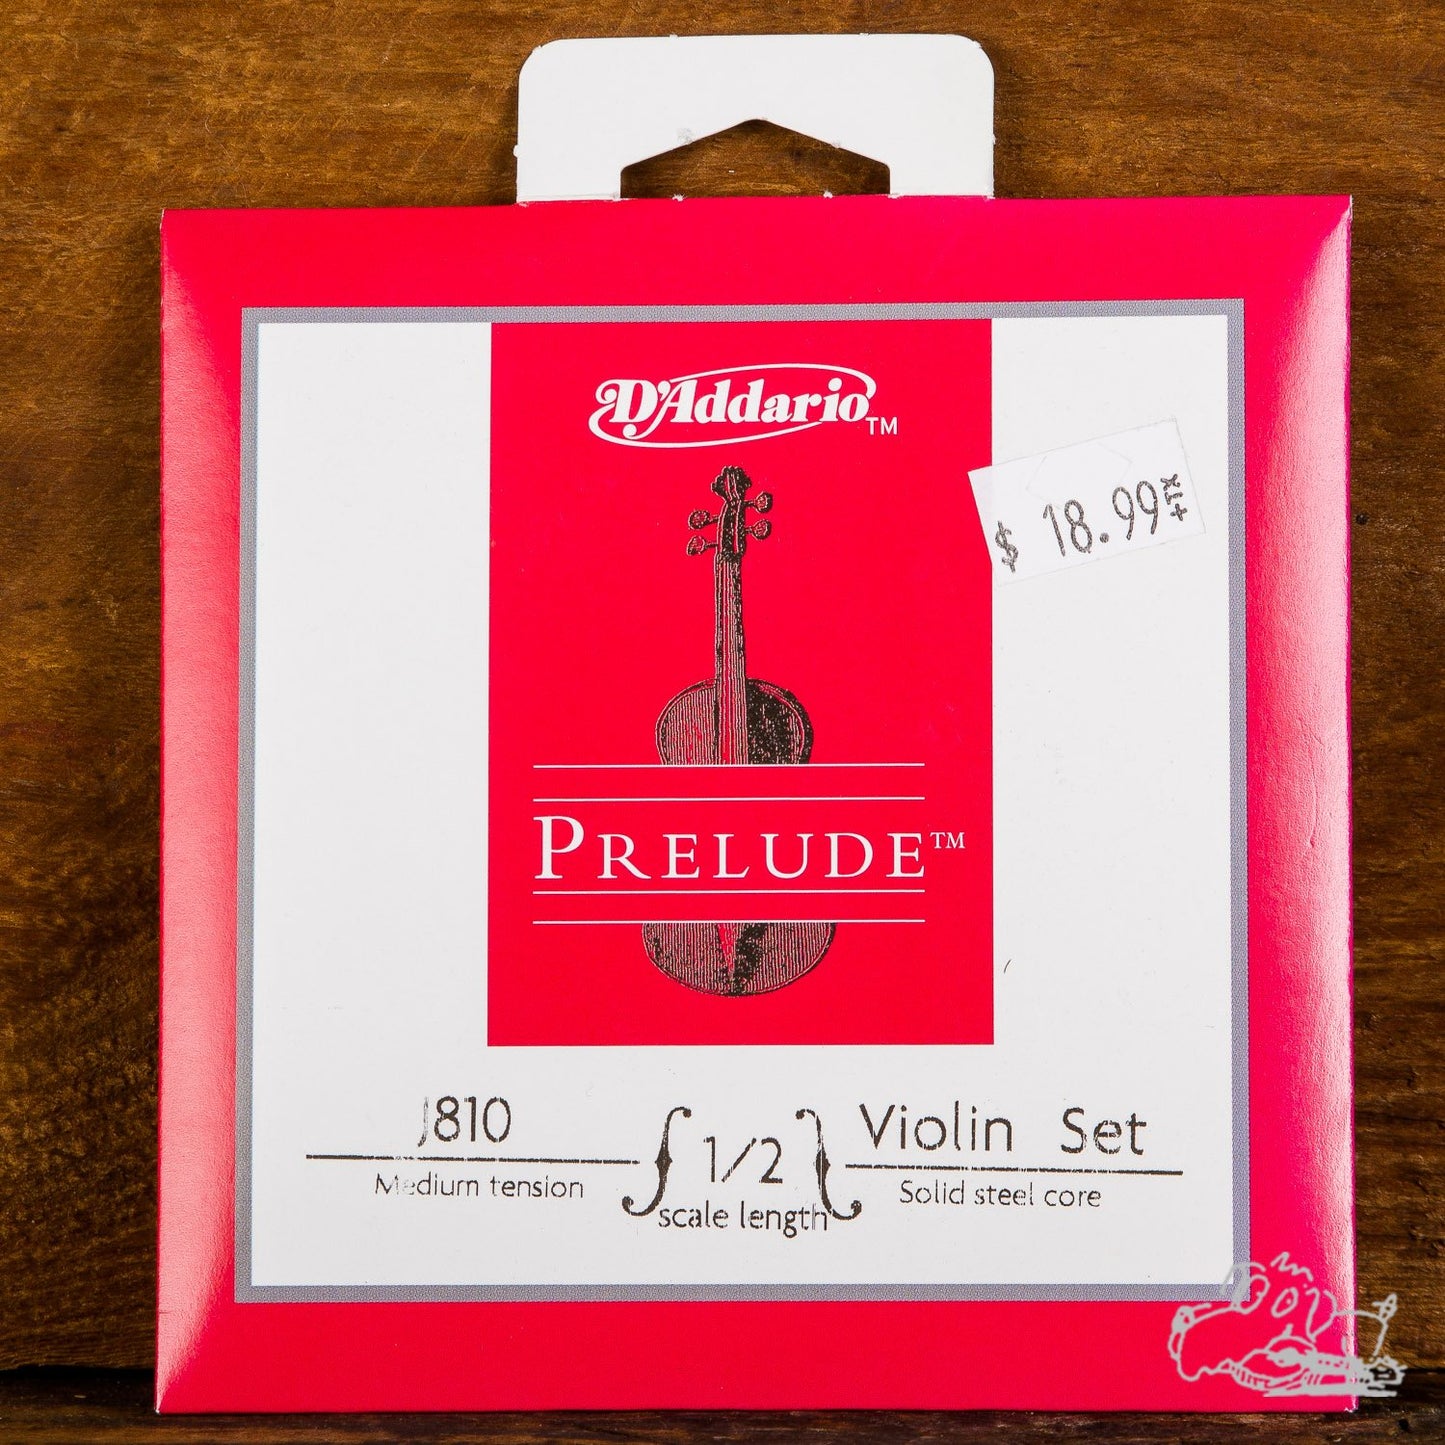 D'Addario Prelude Violin Strings 1/2 Scale Length Solid Steel Core